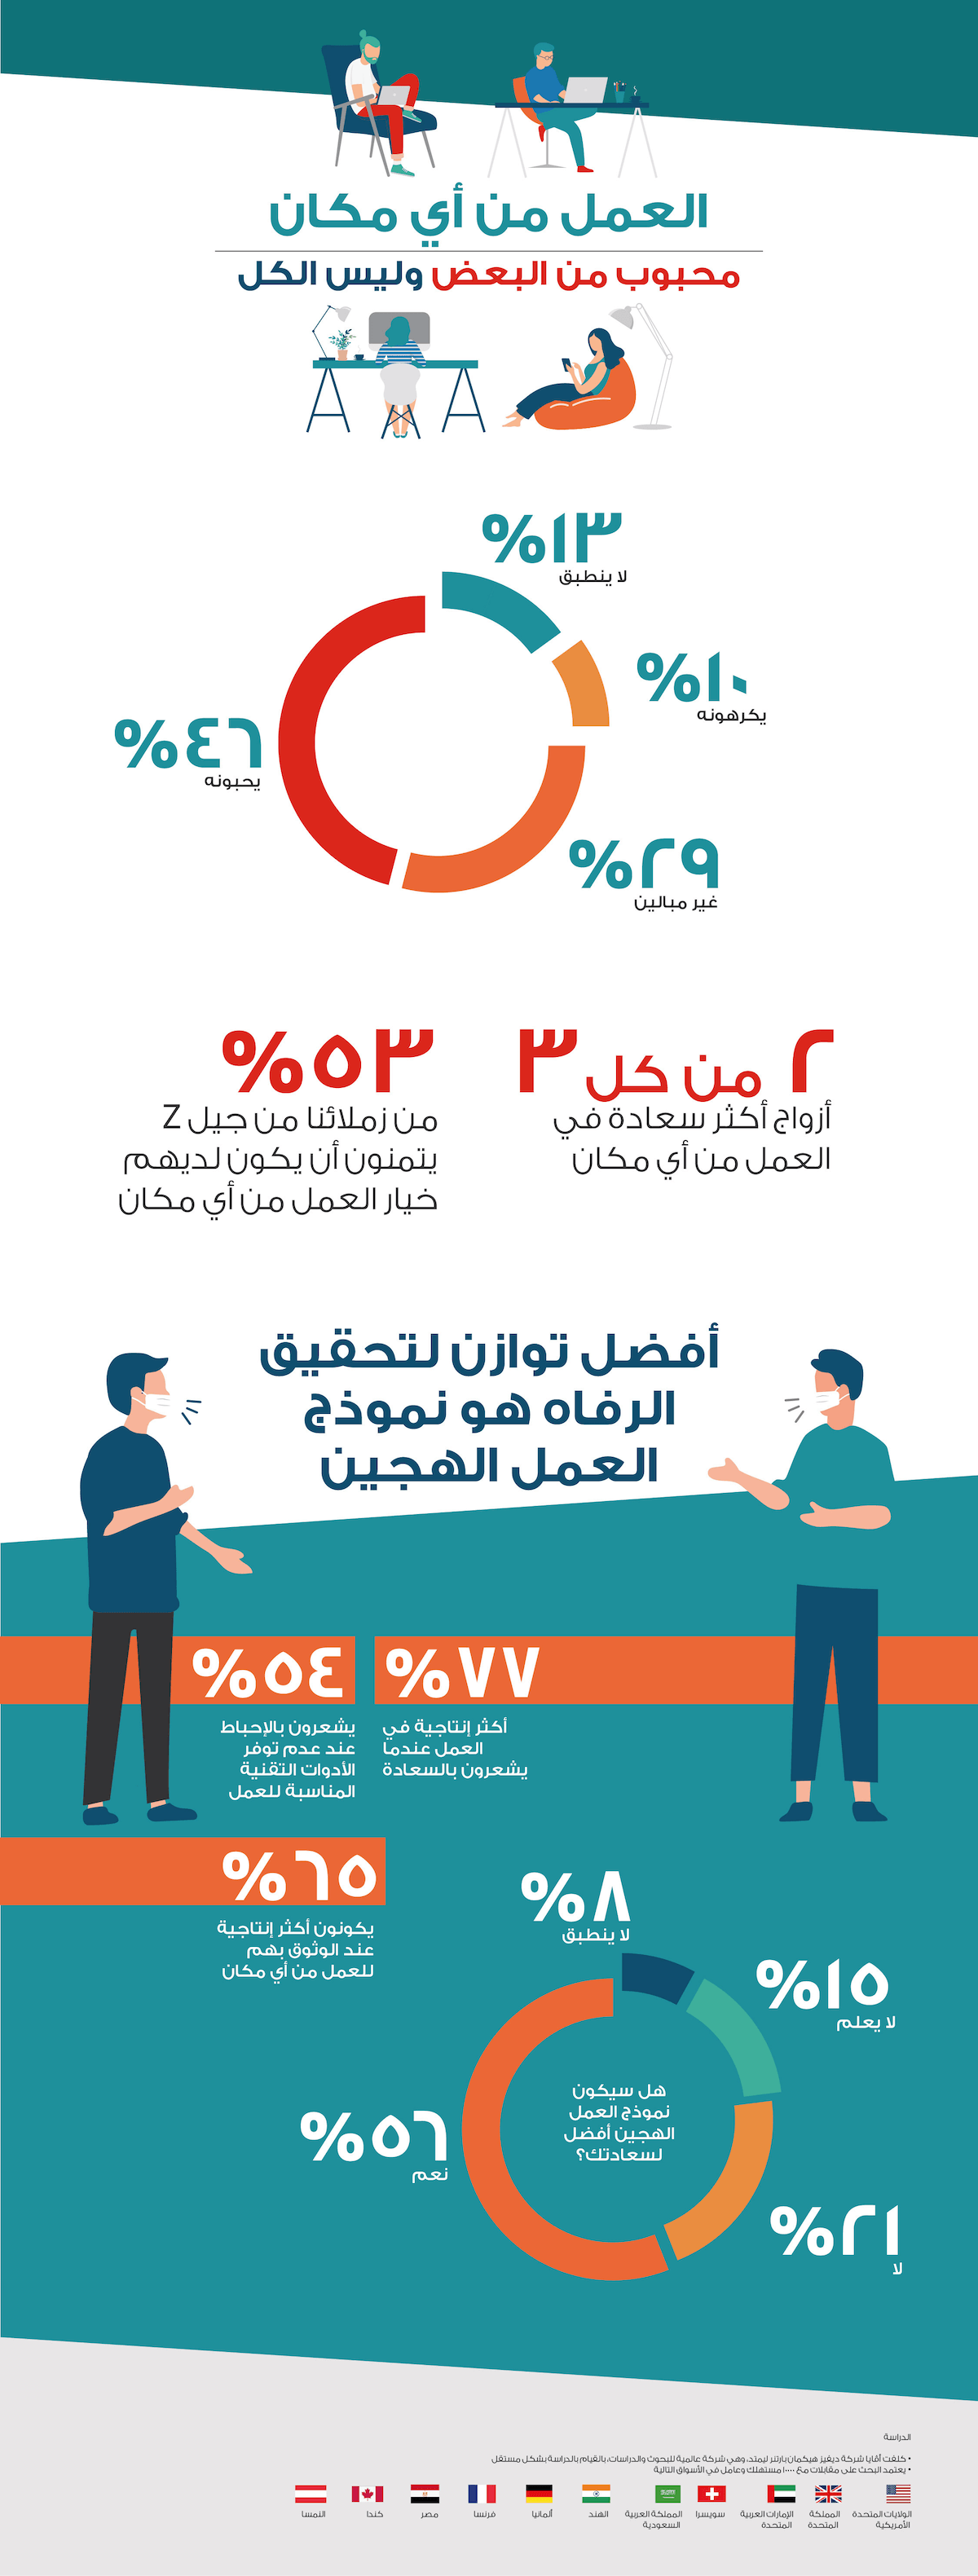 Avaya Life and Work Beyond - Arabic infographic V2